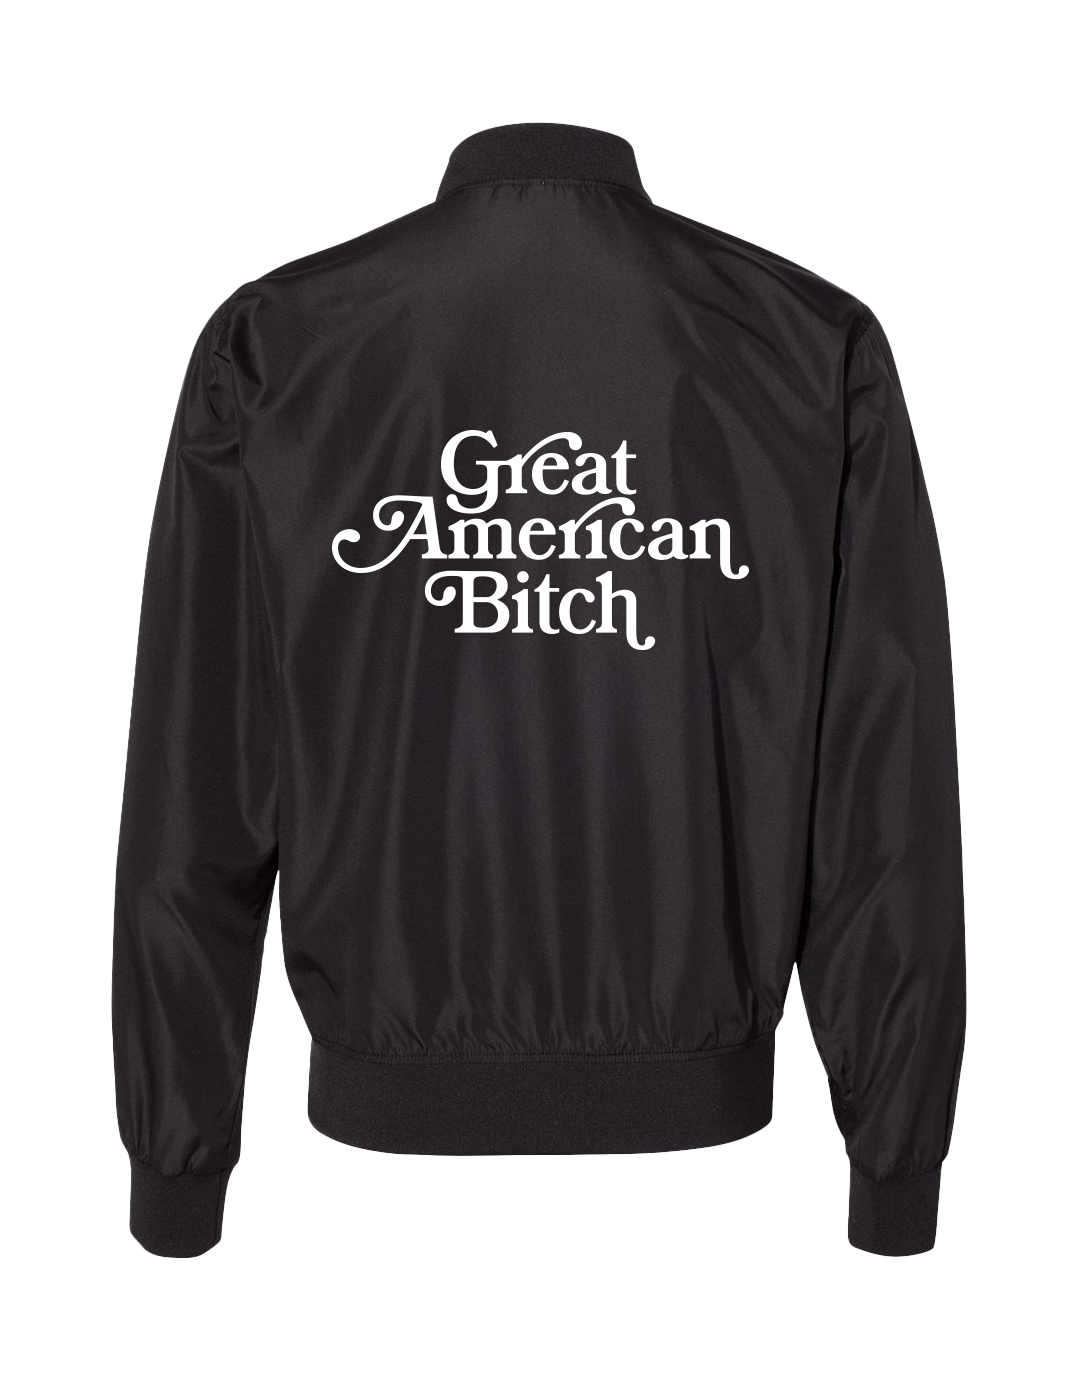 Great American Bitch Jacket